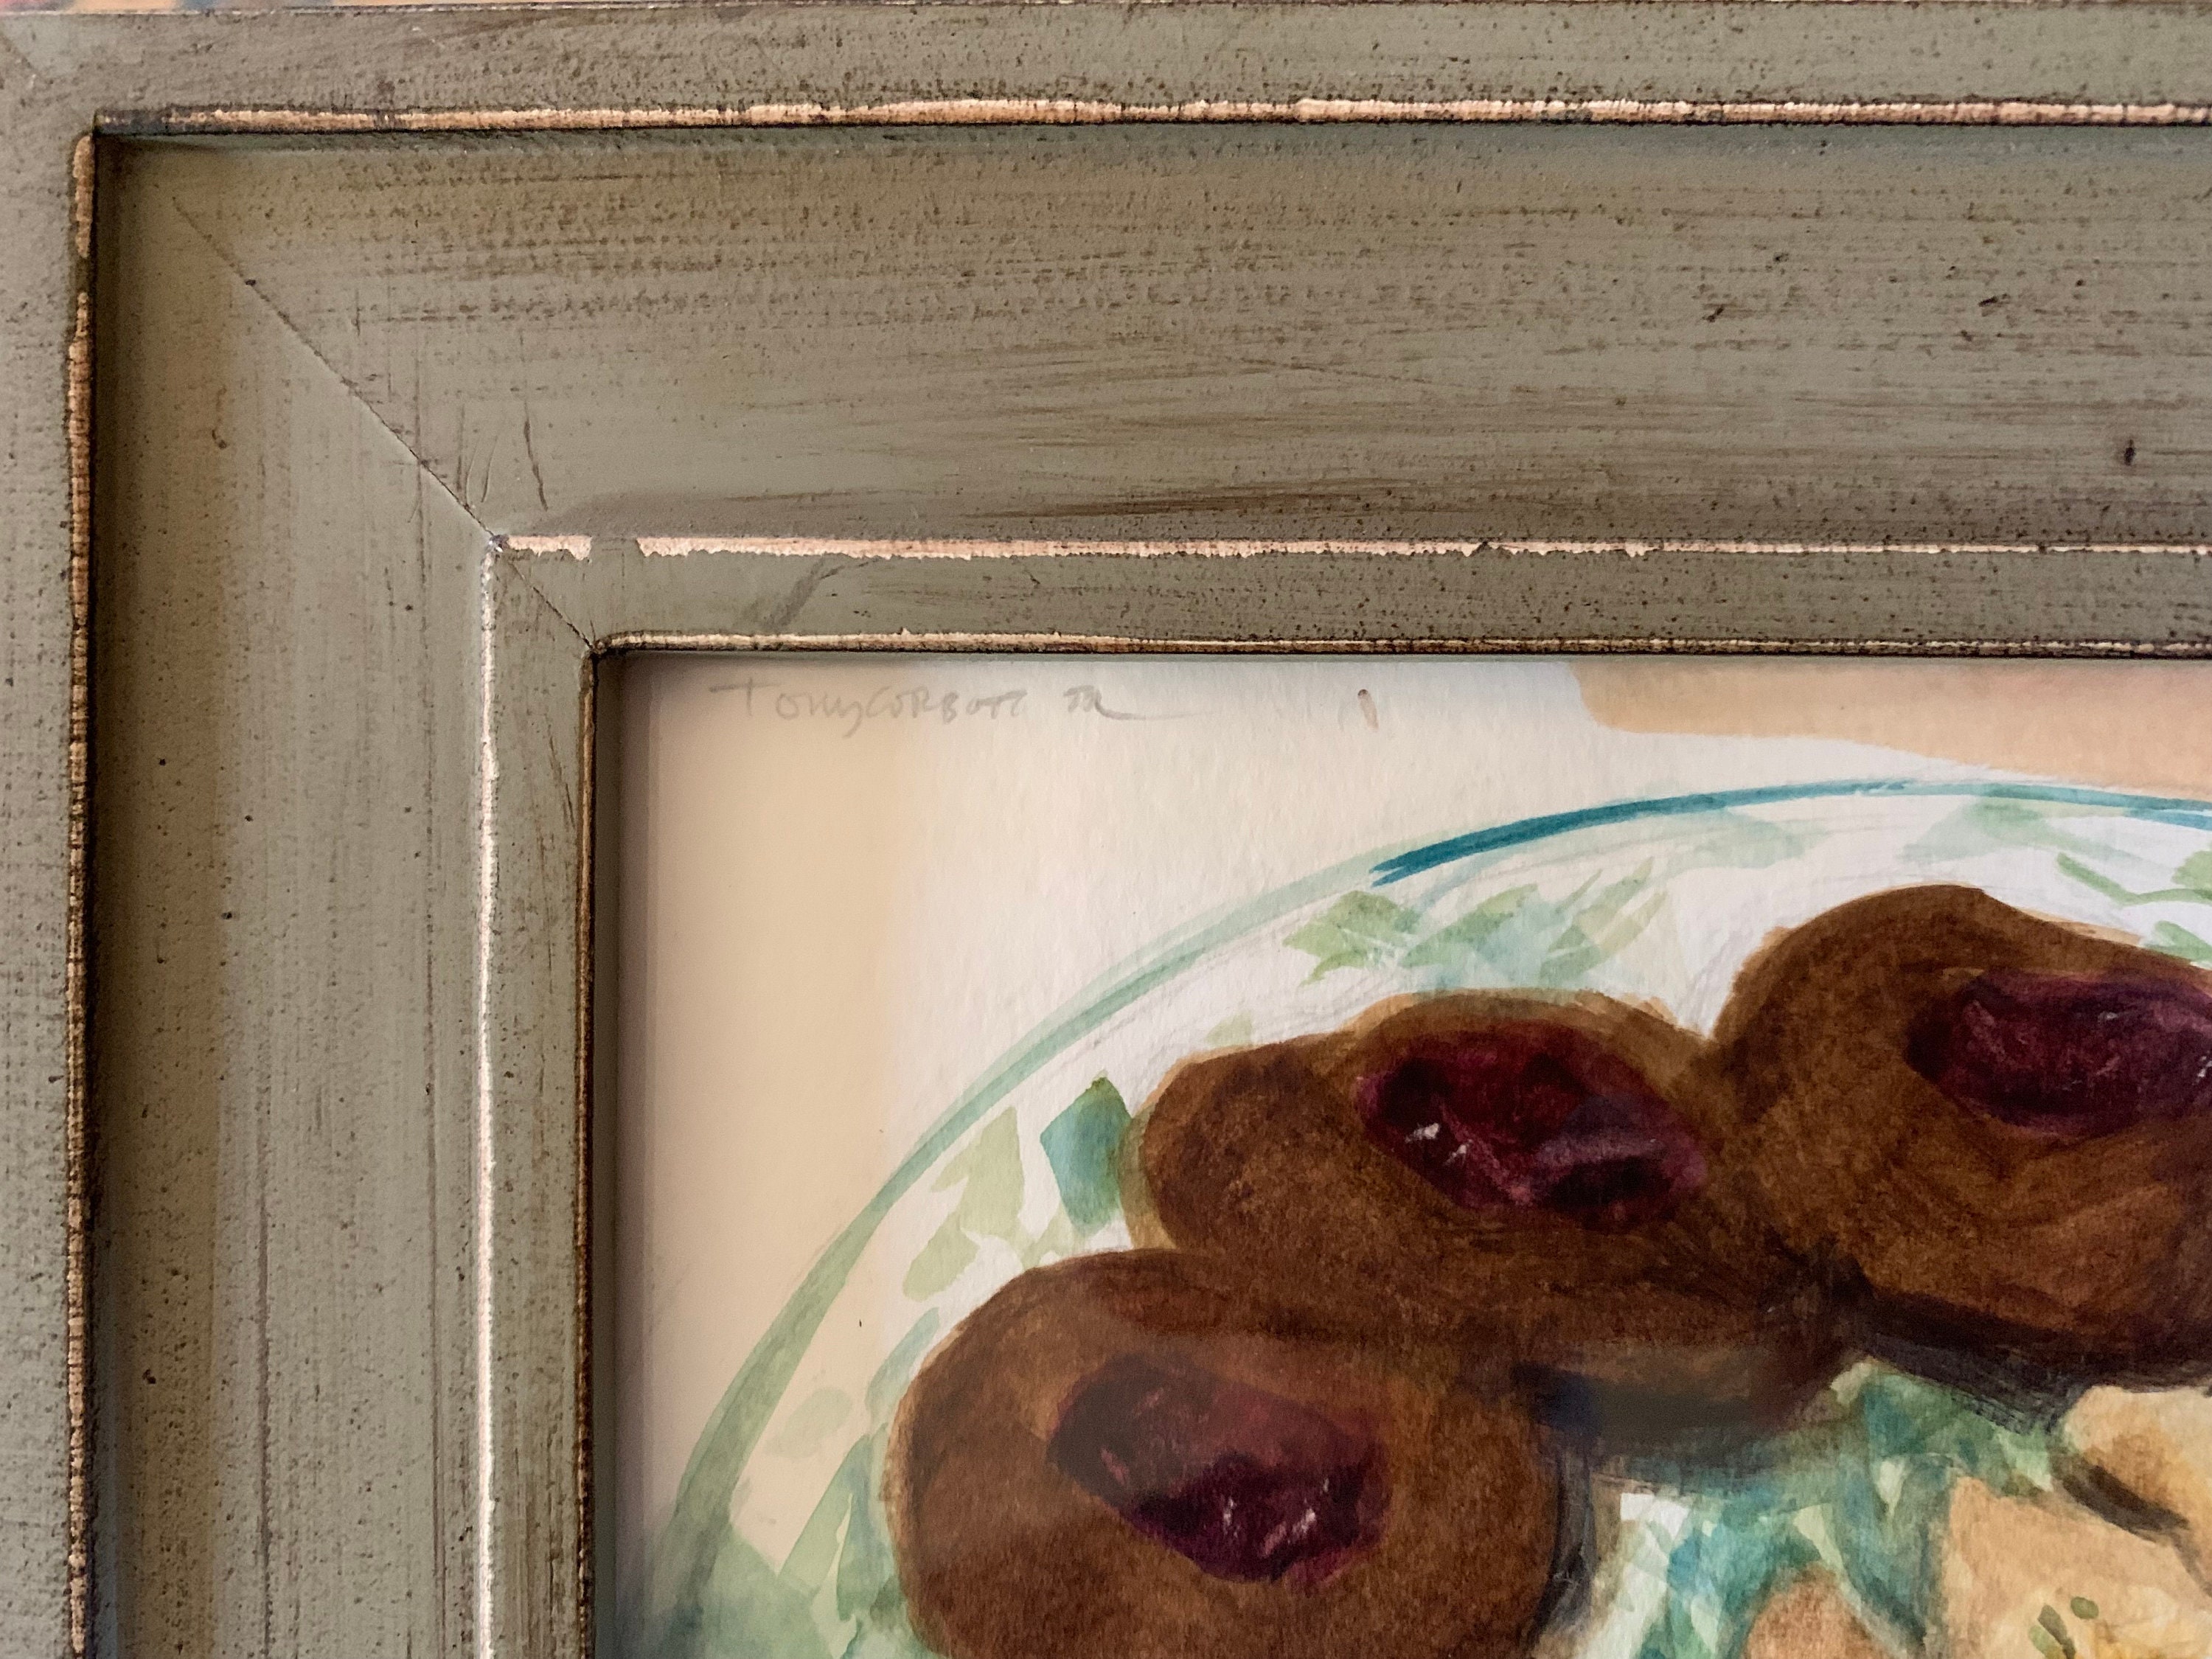 Christmas Cookies 2, Framed Original Watercolor Painting on 5x7